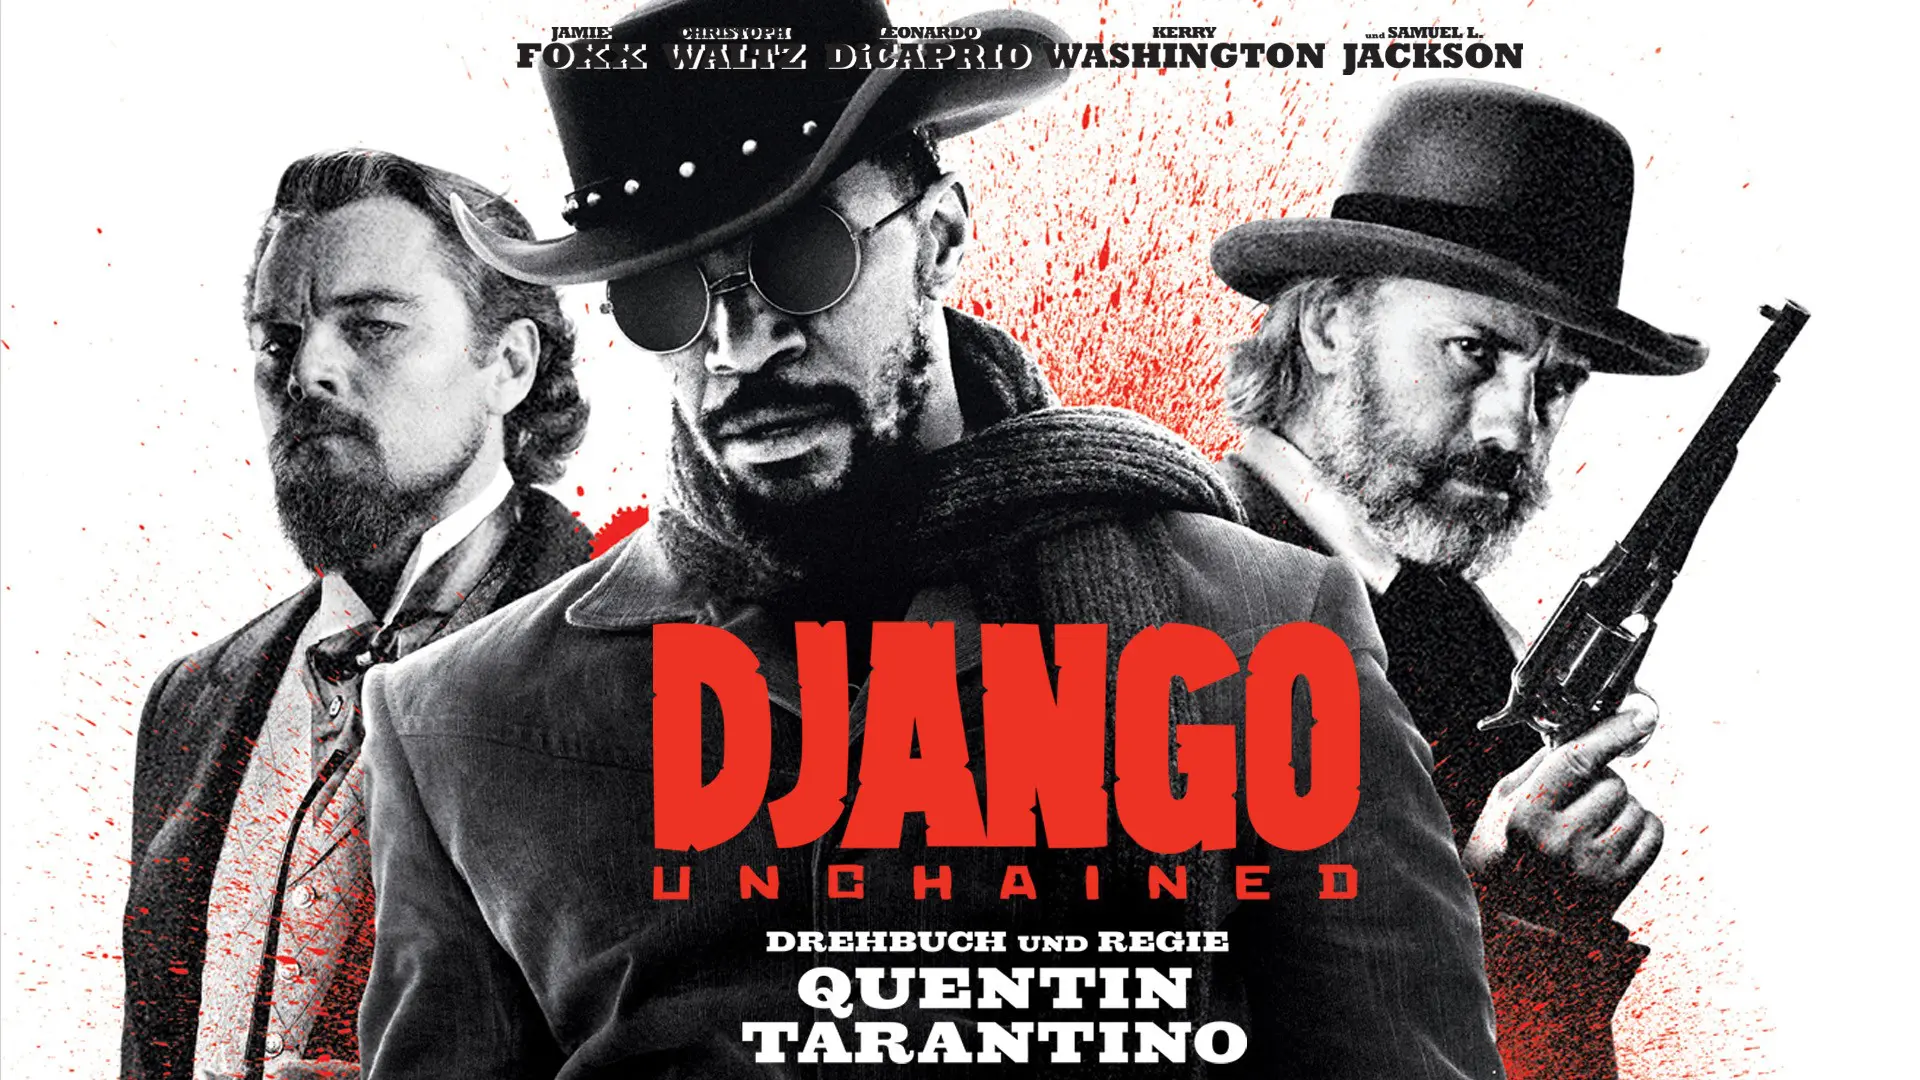 Film garapan sutradara Quentin Tarantino yang menceritakan kehidupan para koboi dan budak pada masanya